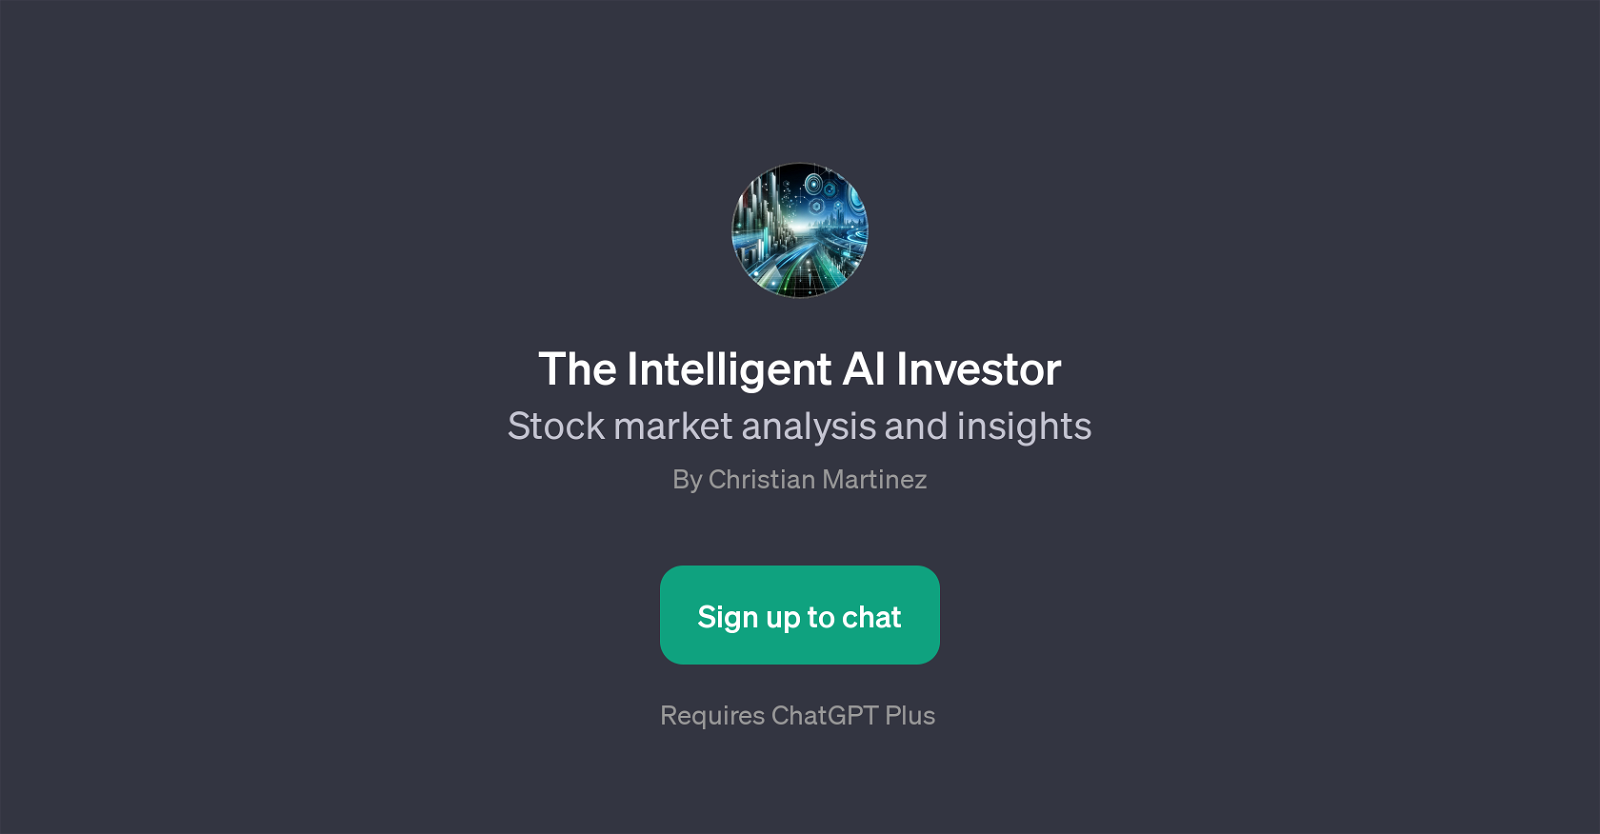 The Intelligent AI Investor website